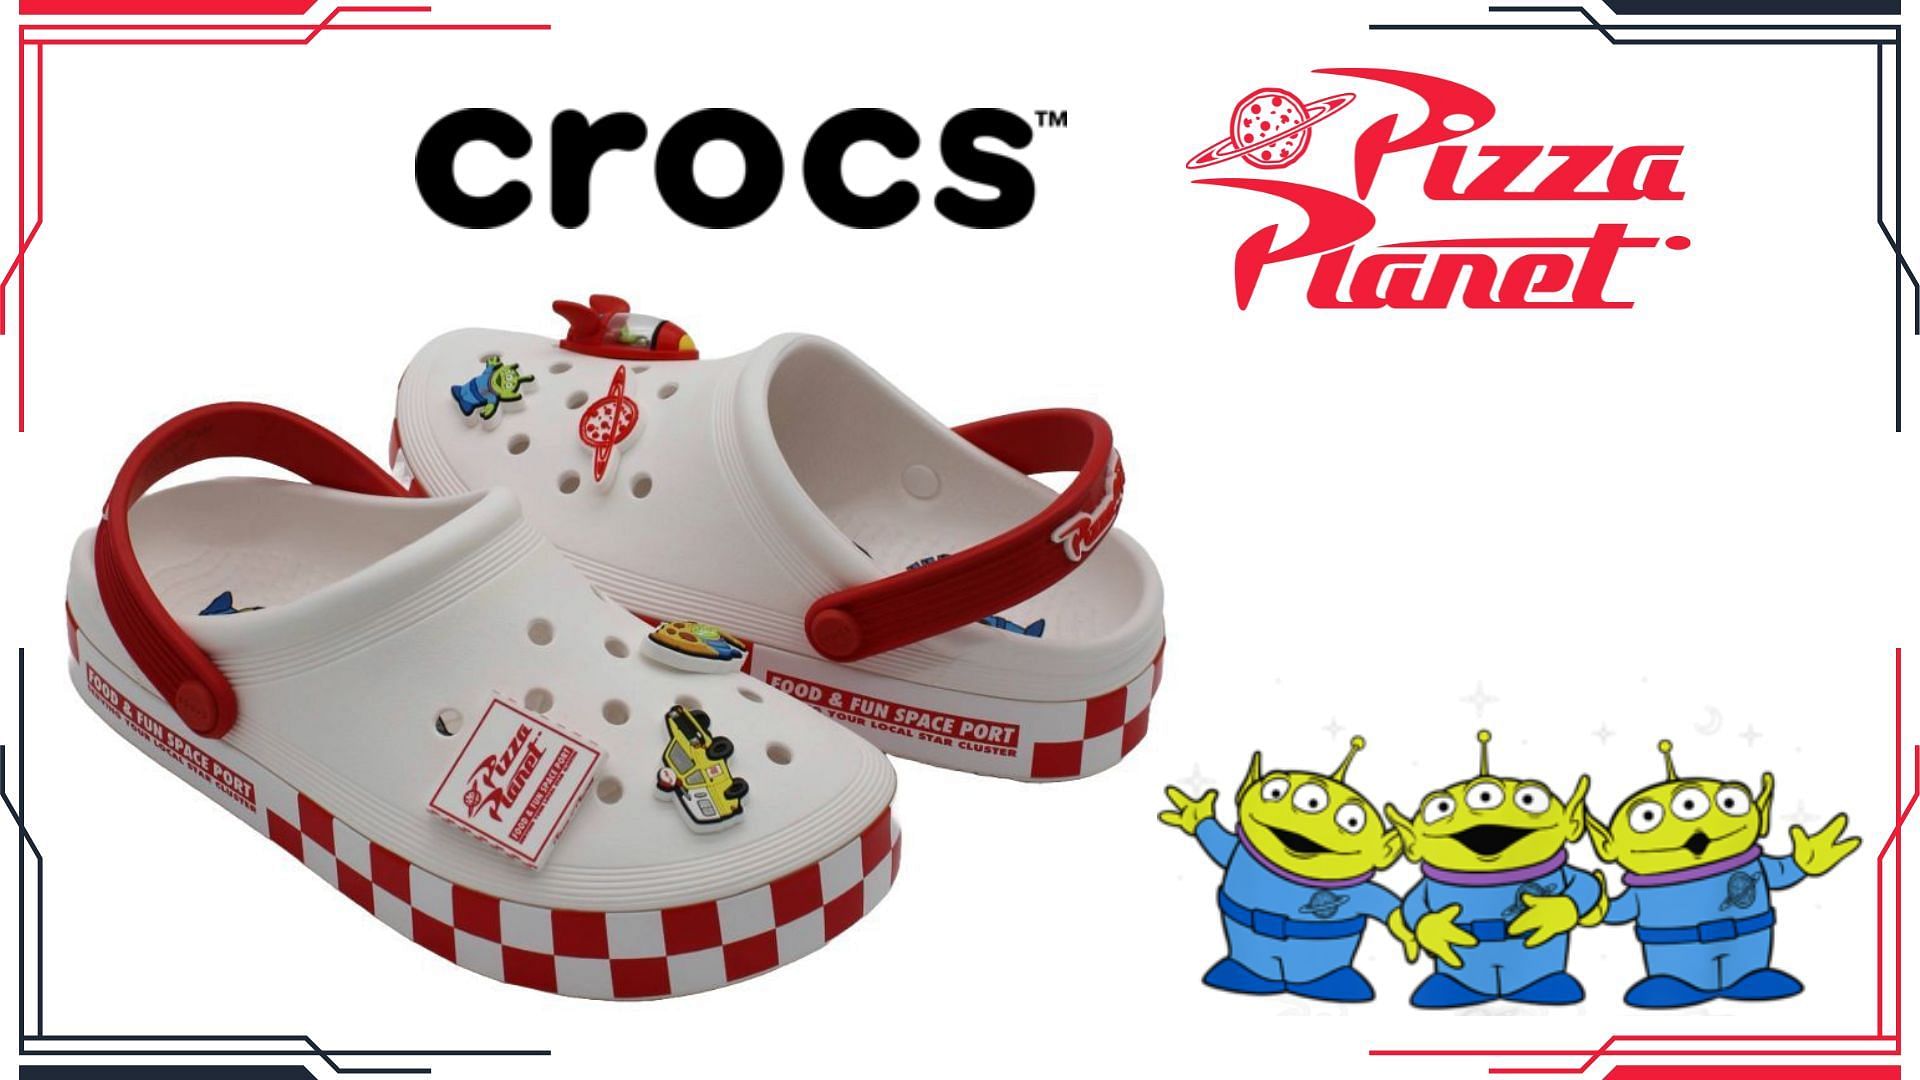 Toy Story x Crocs Classic Clog Pizza Planet colorway (Image via Instagram/@dadeasskickz)